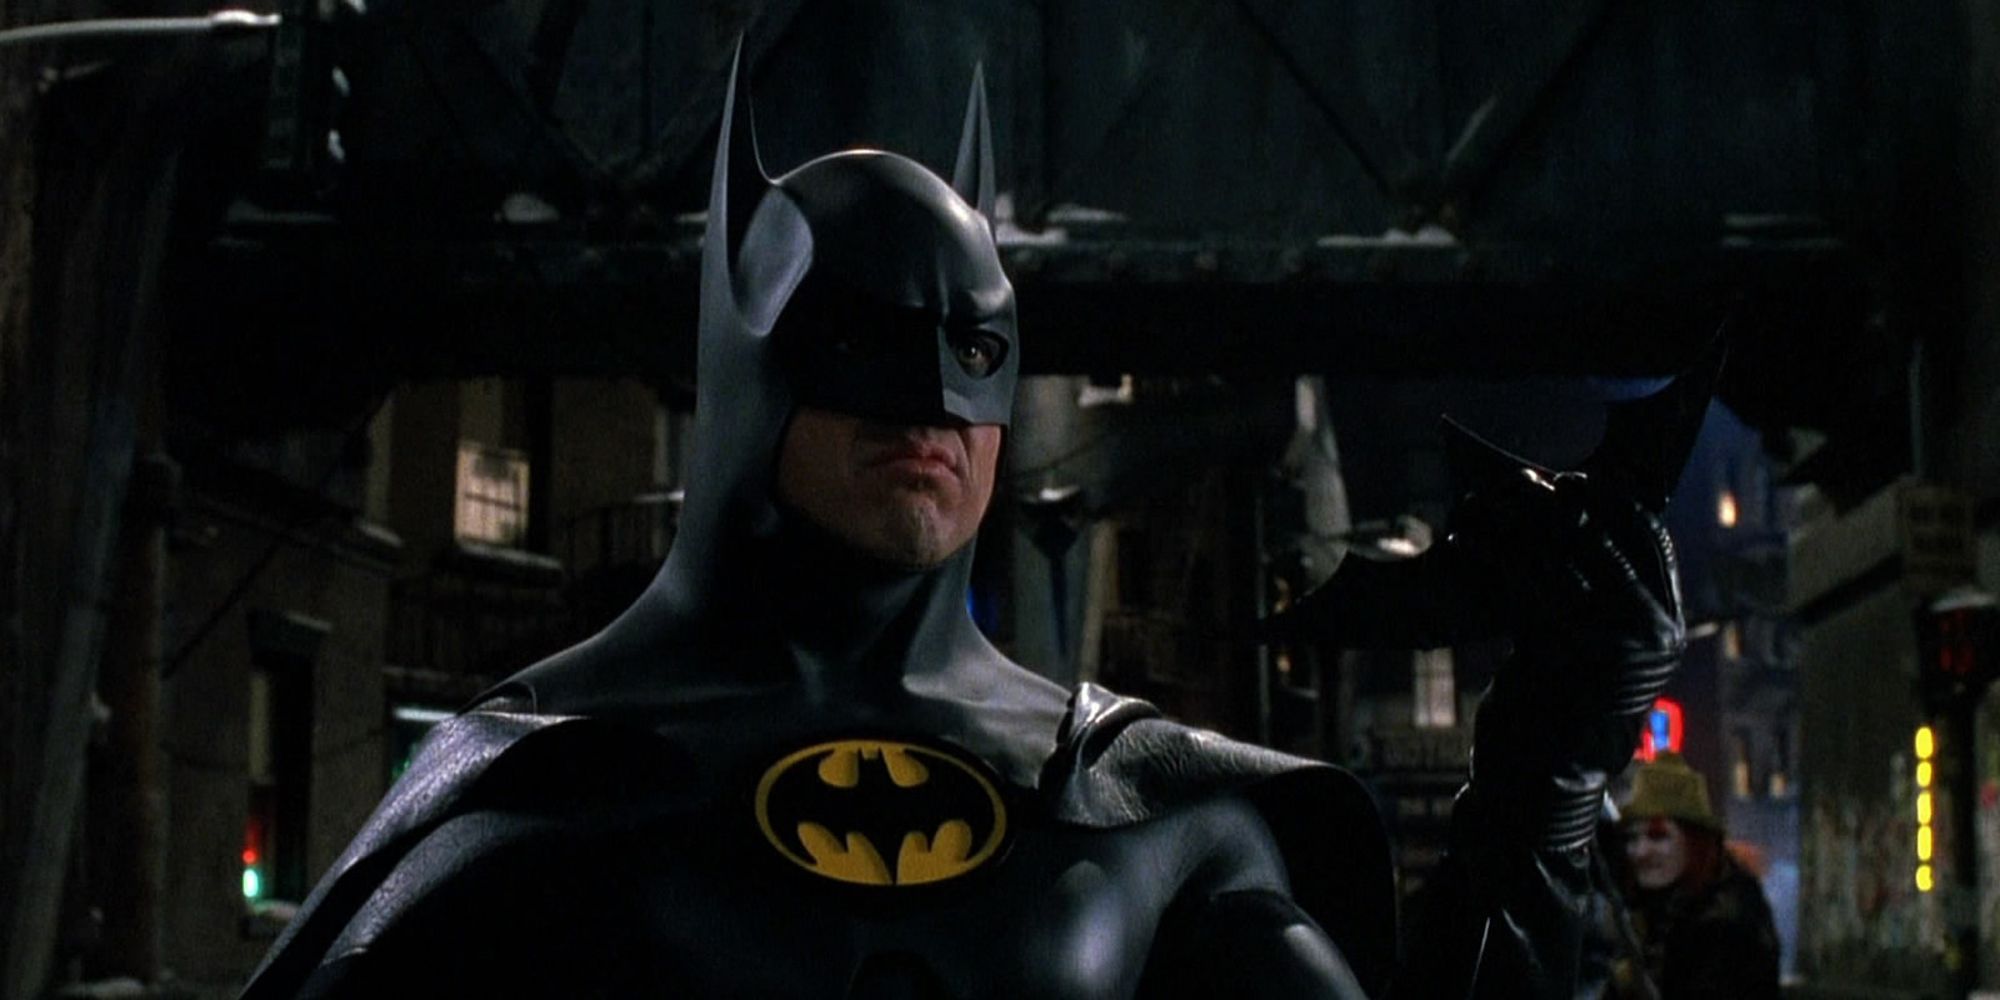 Batman readying a batarang in the street in Batman Returns (1992)